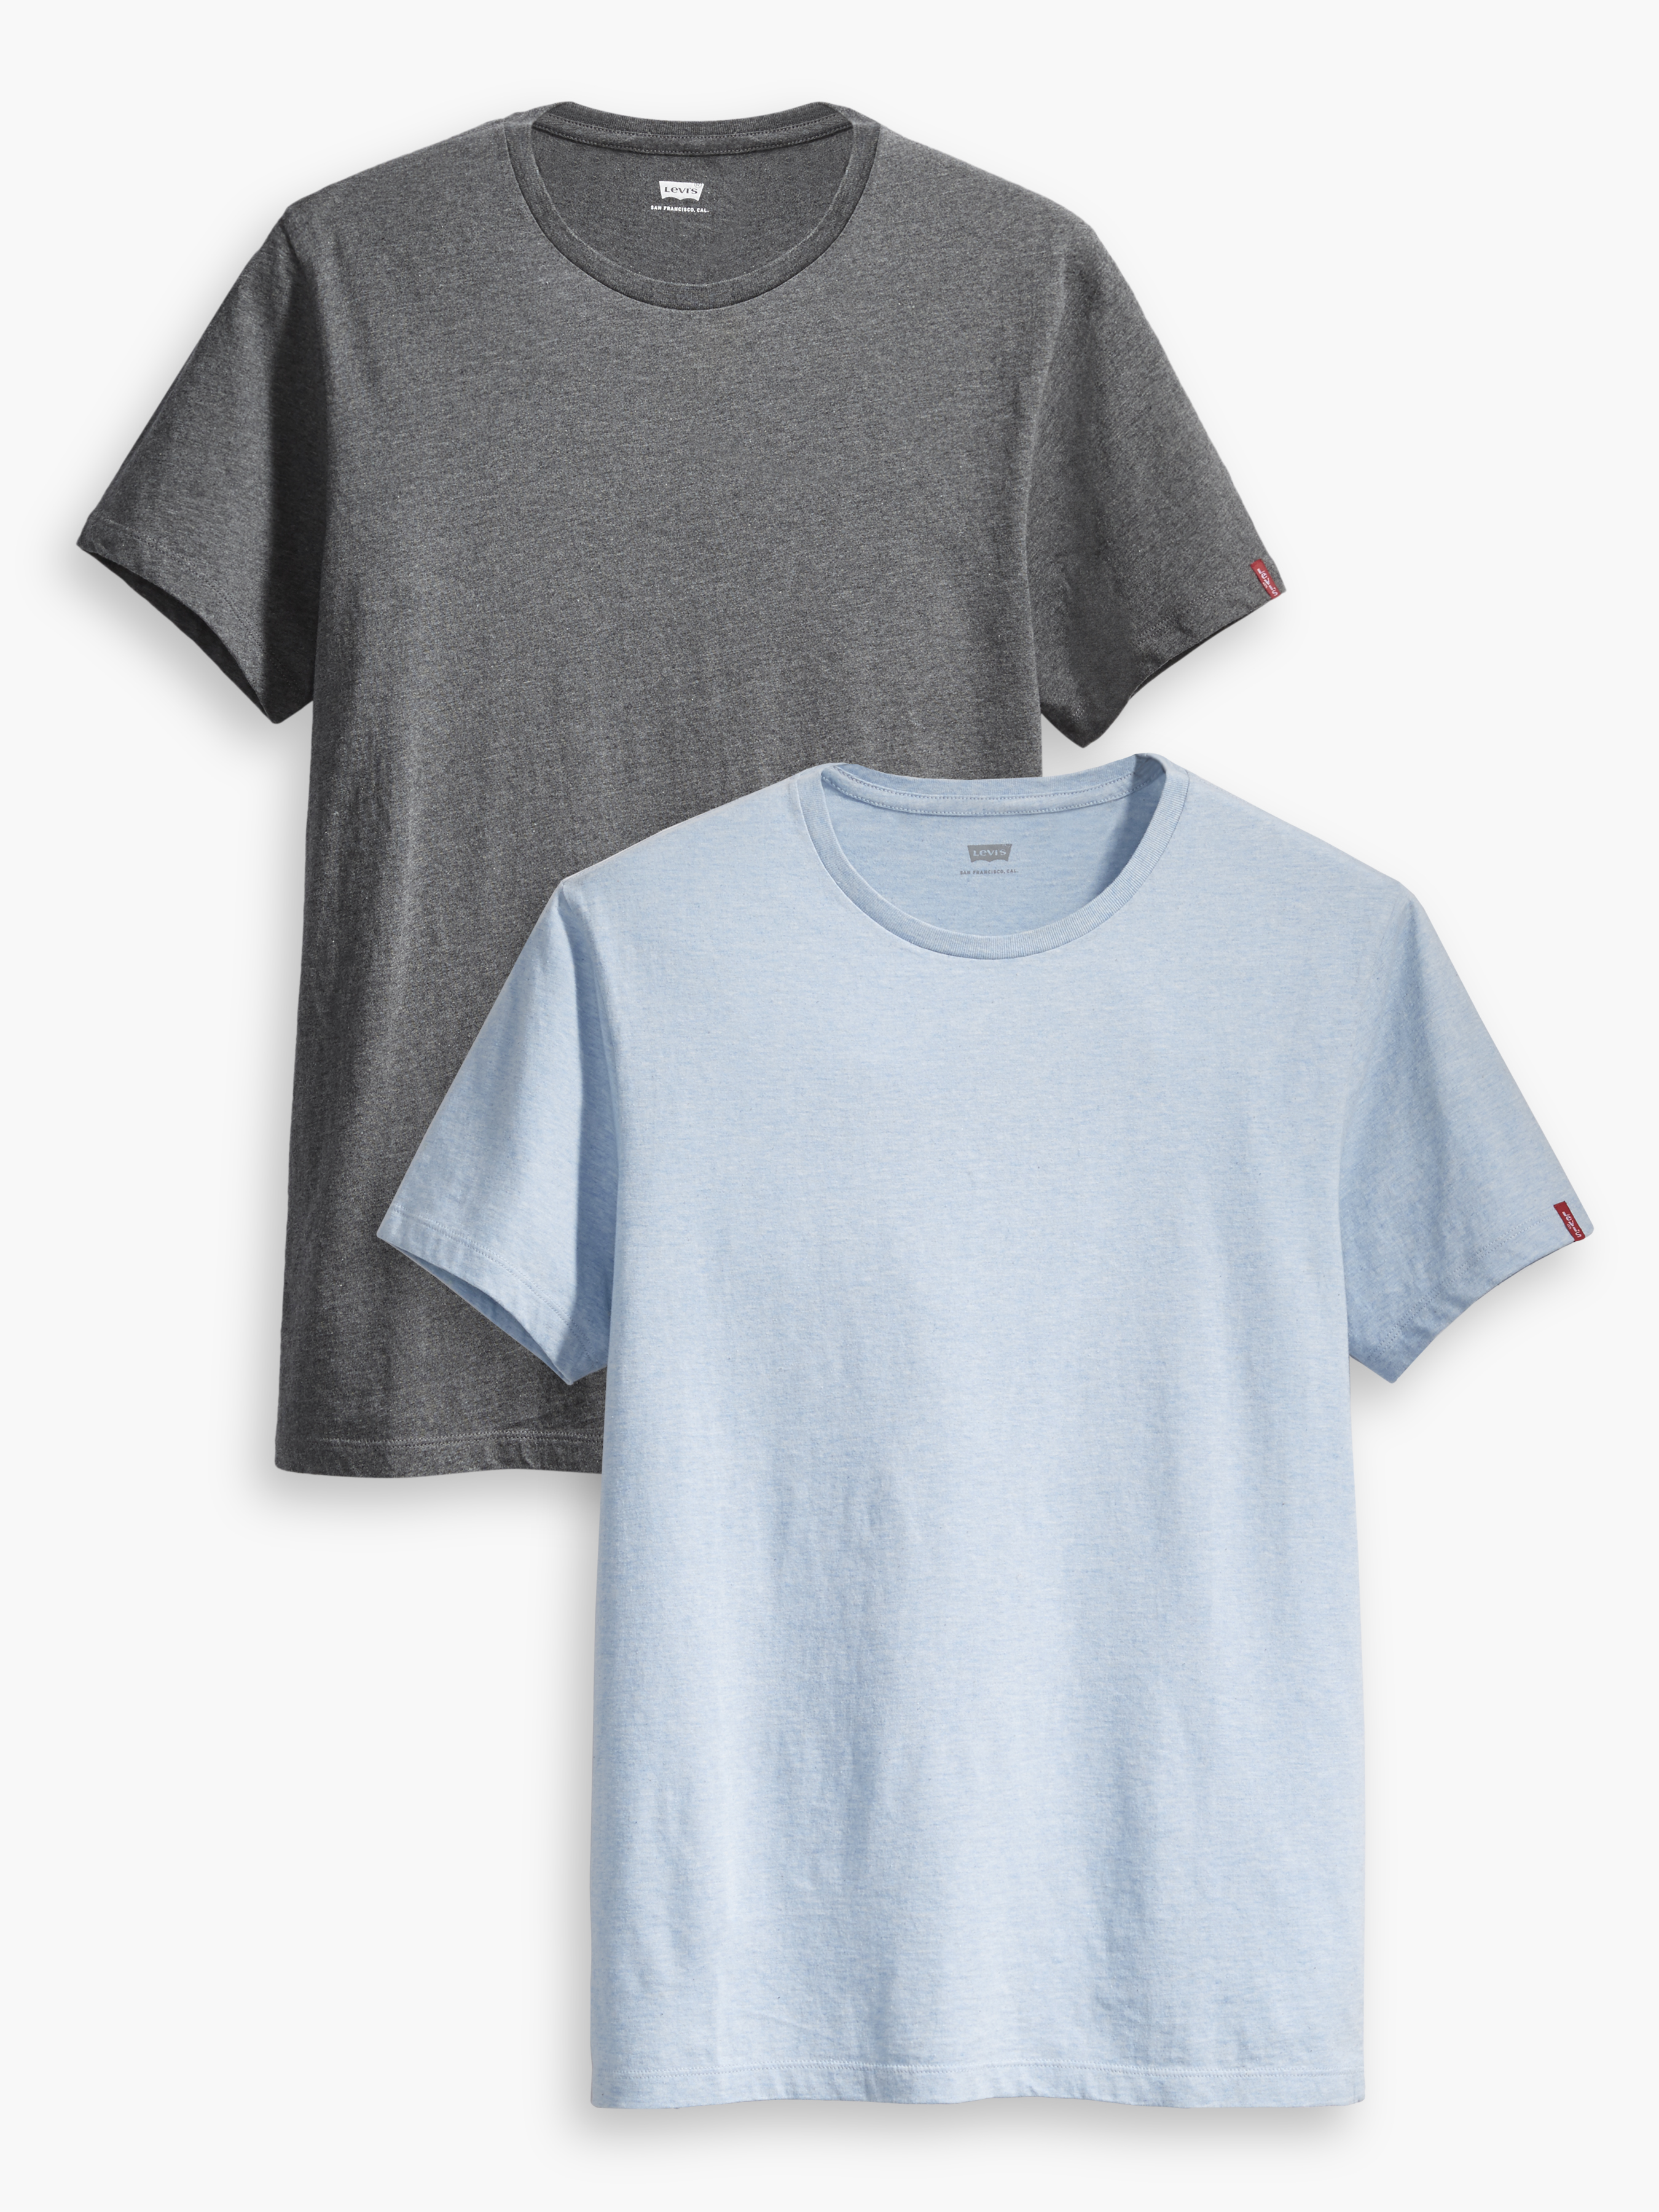 LEVIS T-Shirts 2er Pack 82176-0026 grau, hellblau W18-LVT1